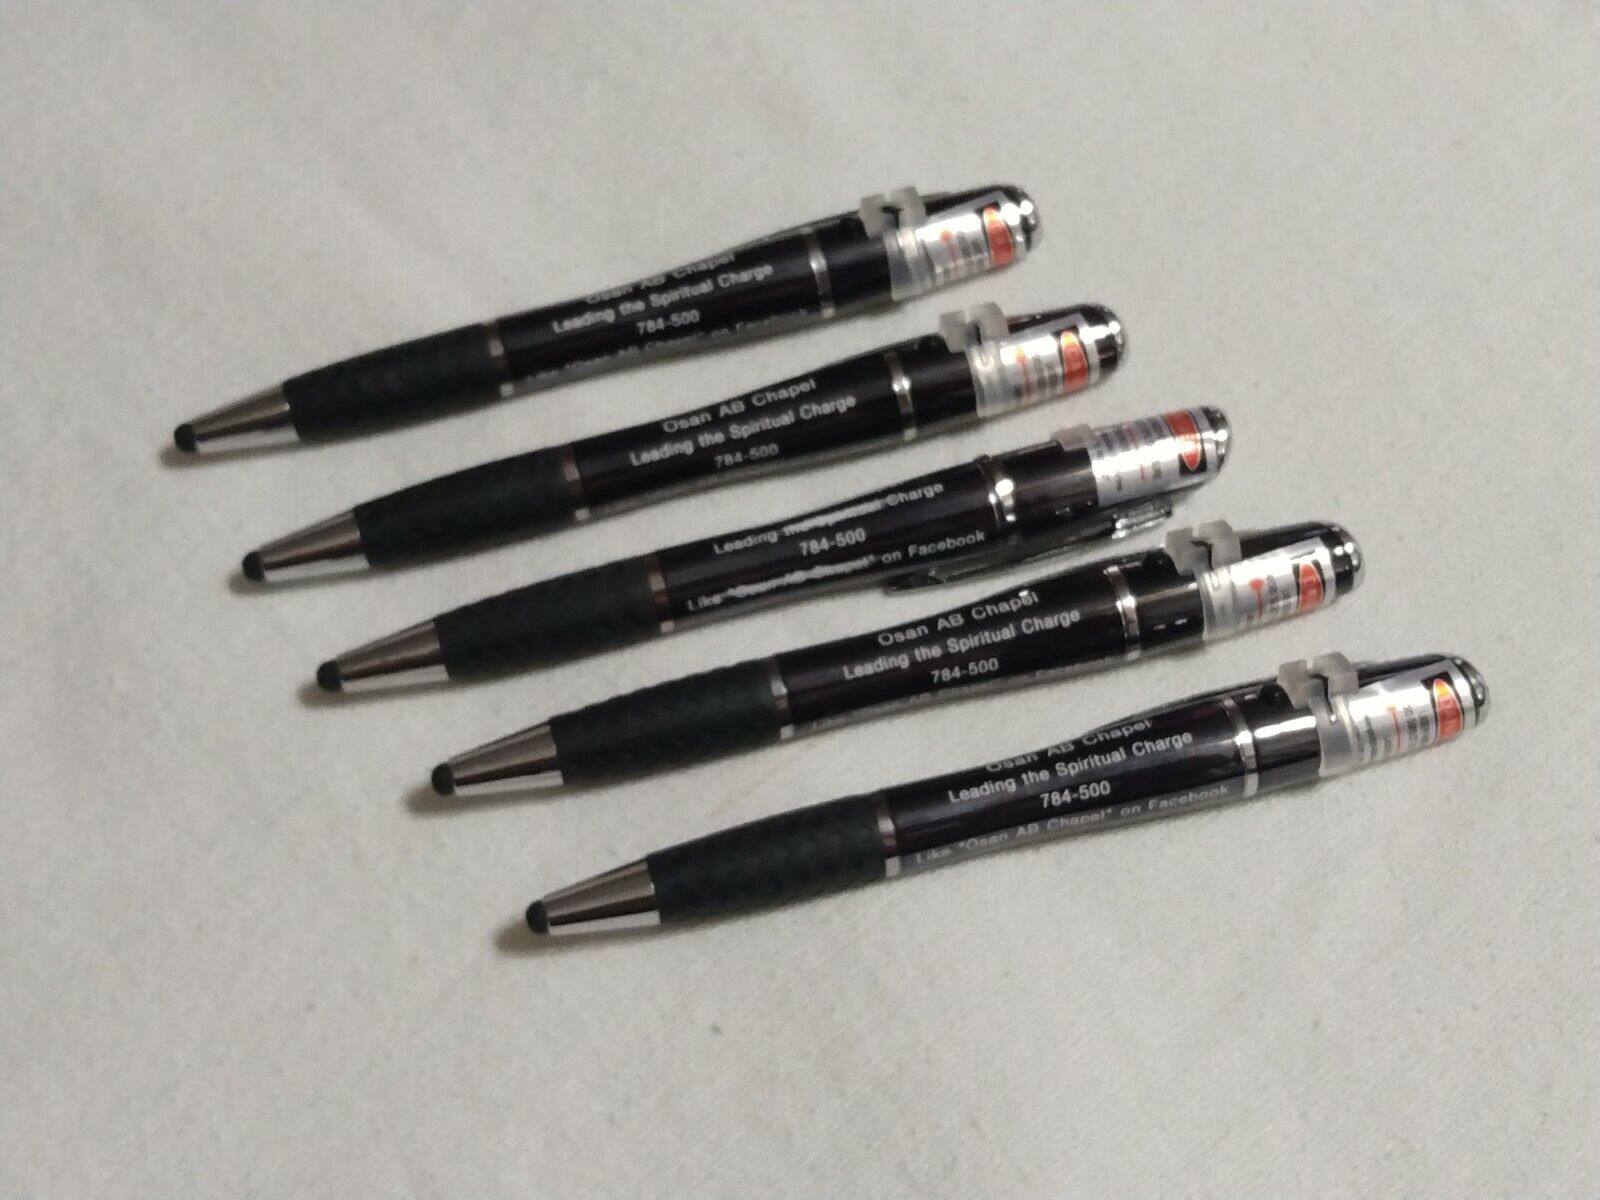 5 pc lot: 4 in 1 Flashlight /Laser Pointer /Ballpoint Misprint Stylus Click Pens Misprint